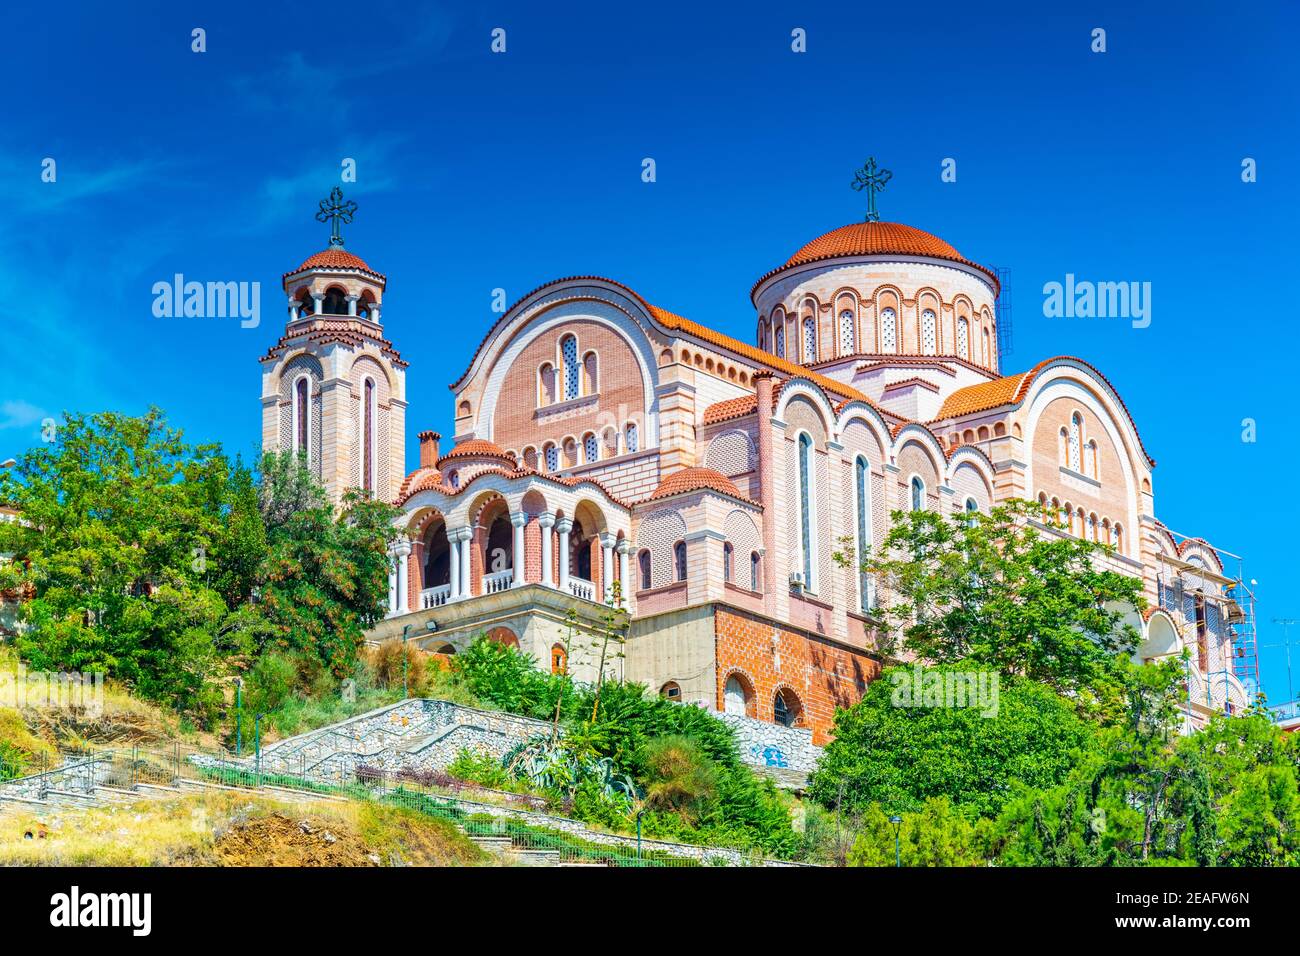 Agii Theodori church in Thessaloniki, Greece Stock Photo